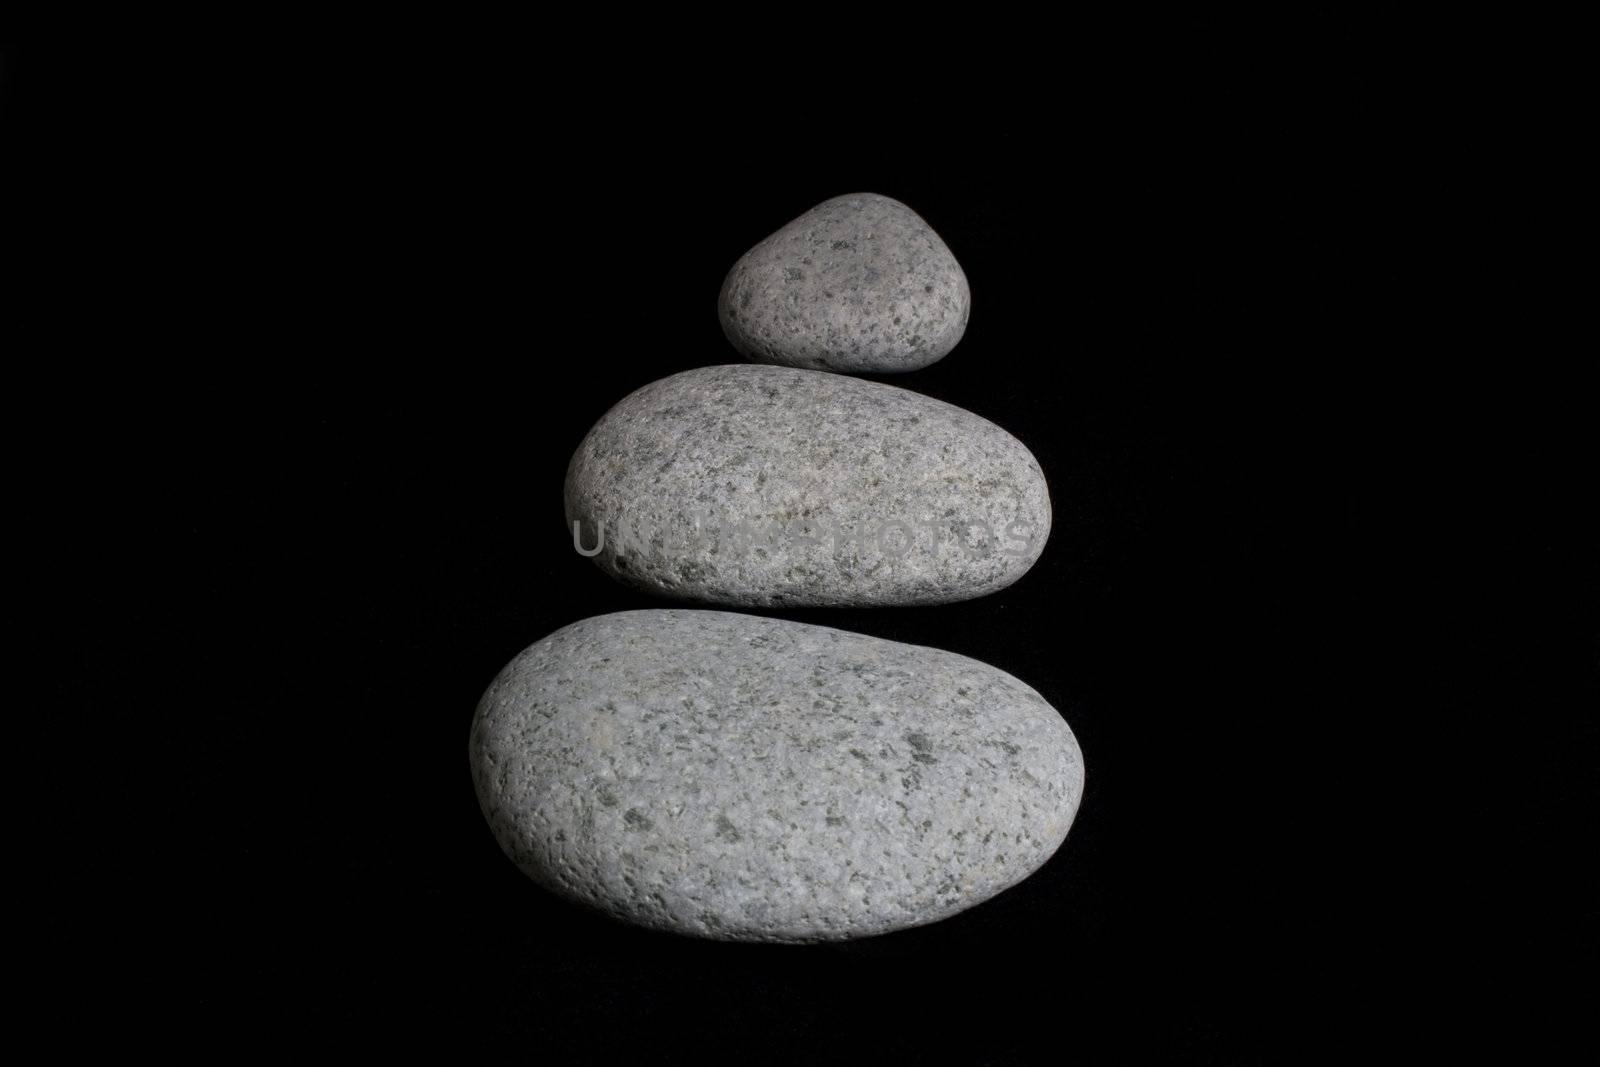 Pebble Stone by BengLim